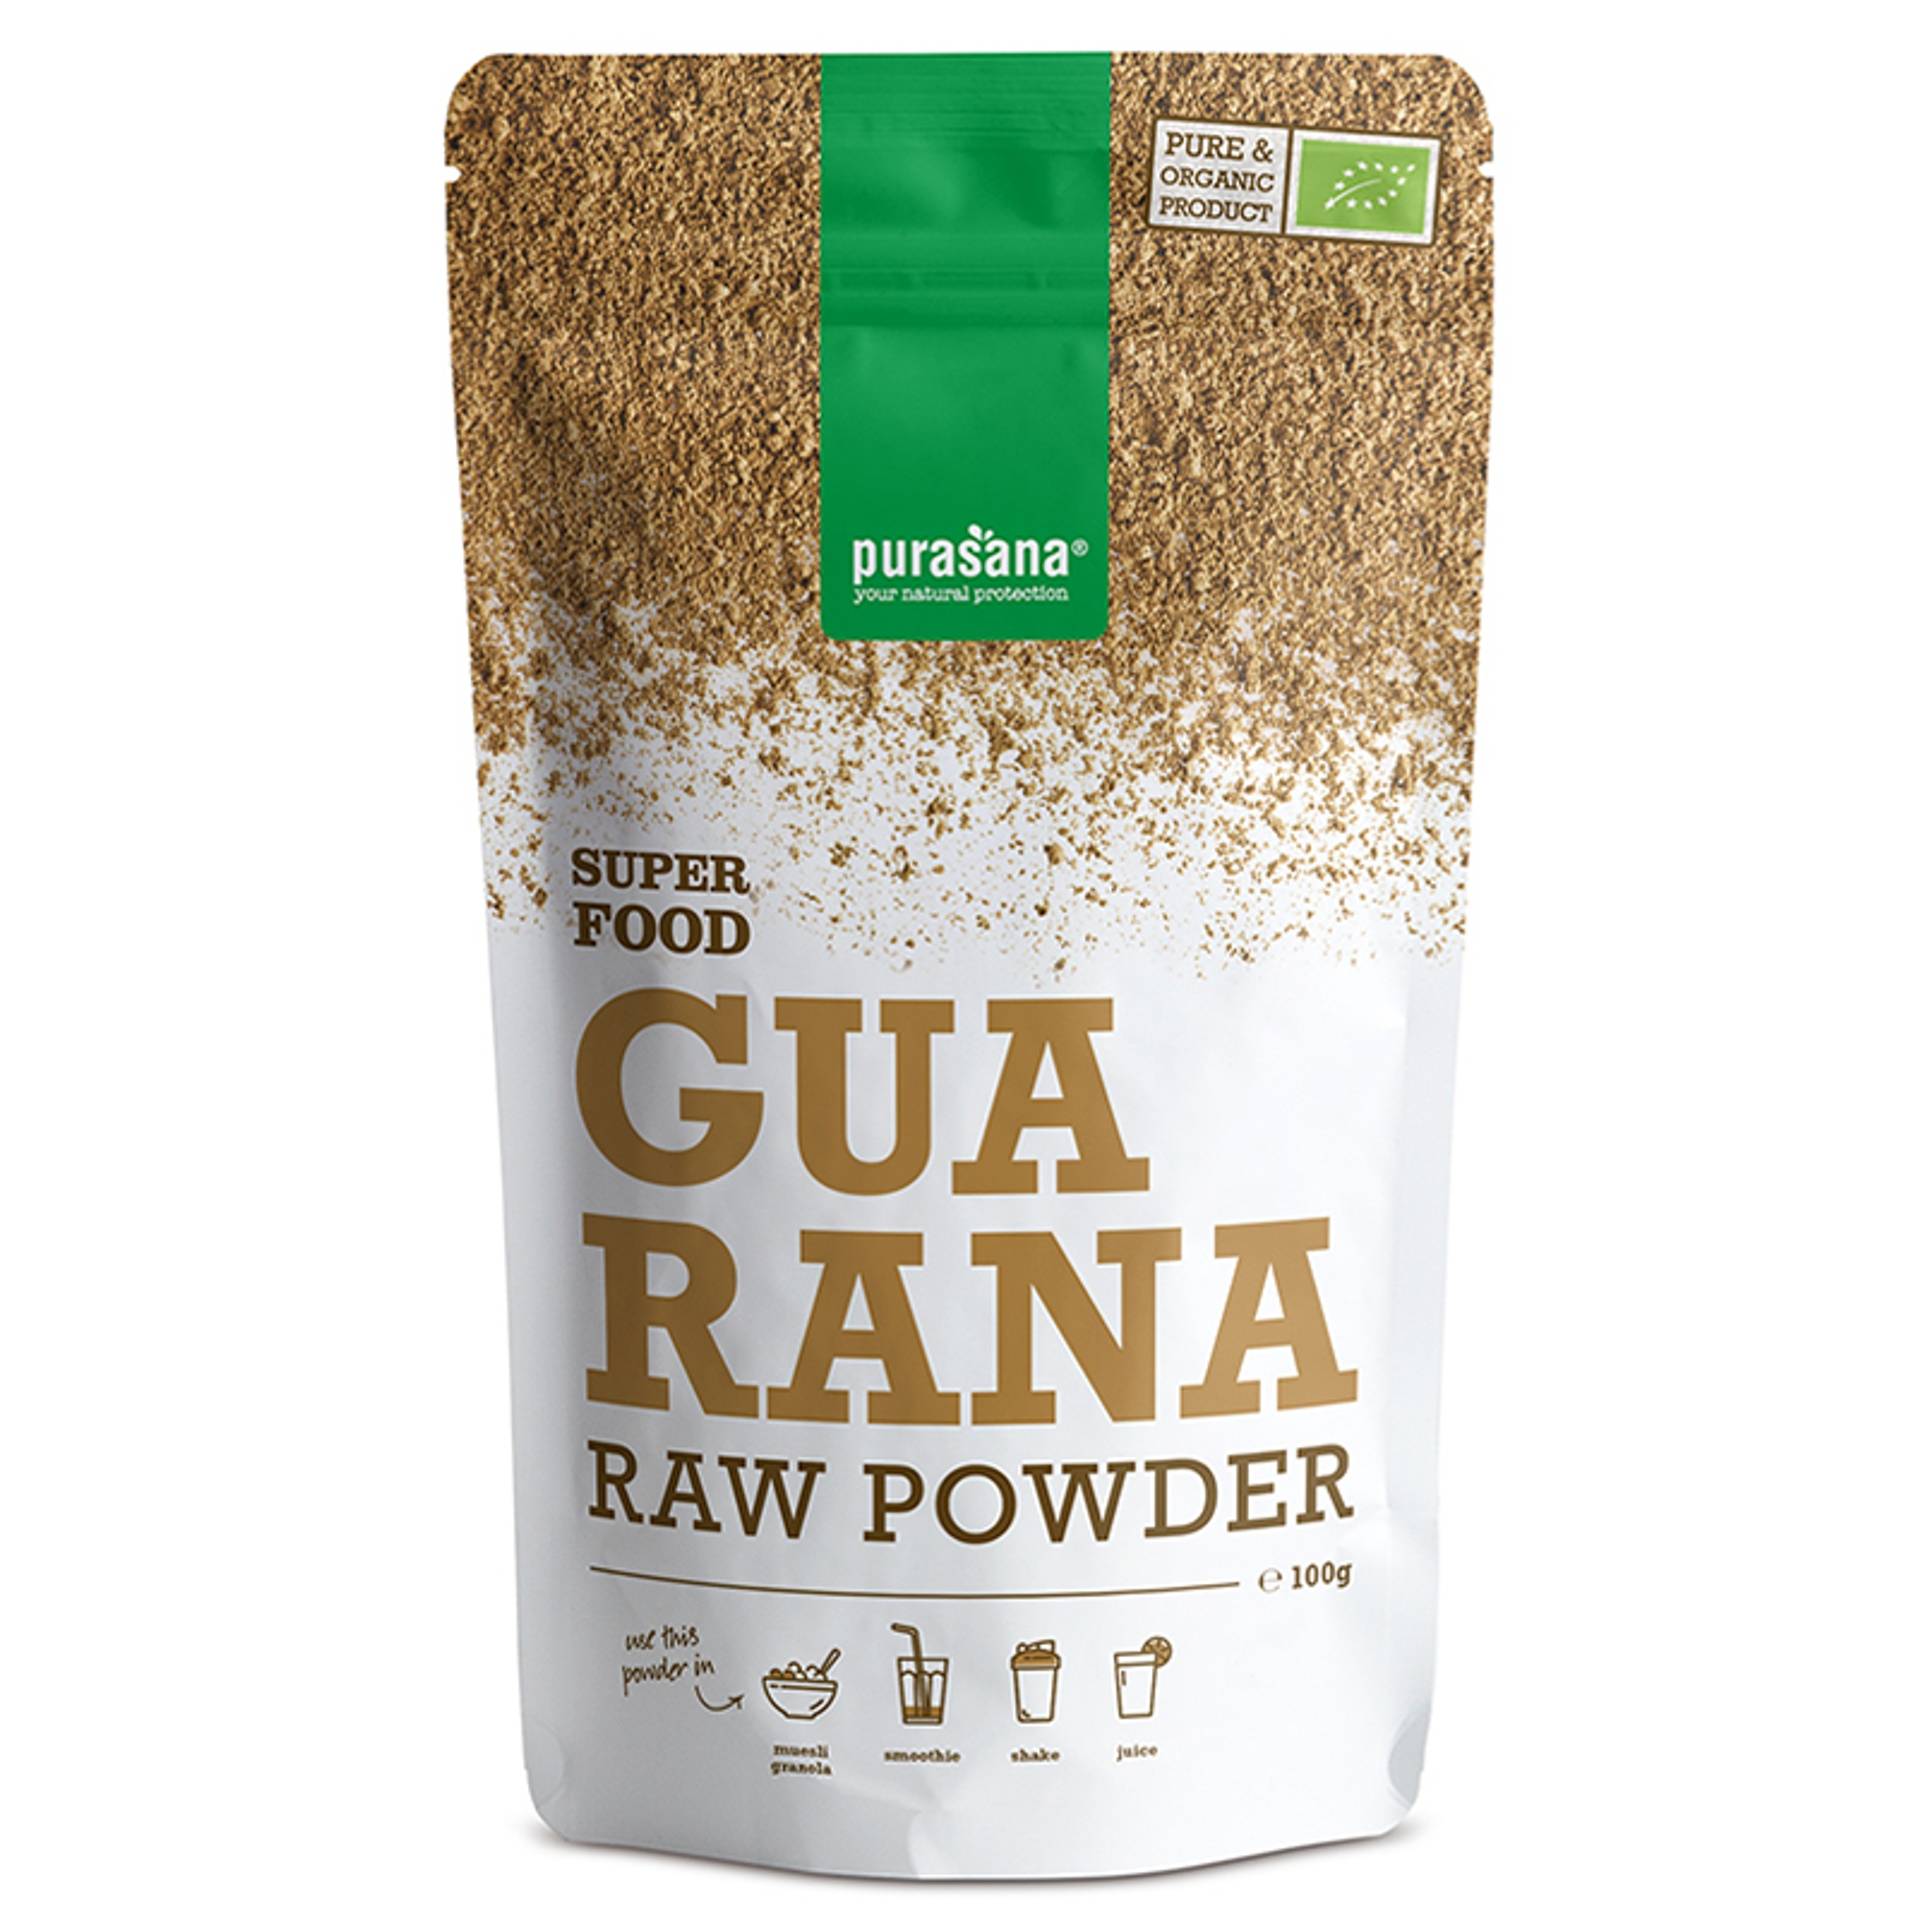 Purasana_Guarana-Raw-Powder.jpg